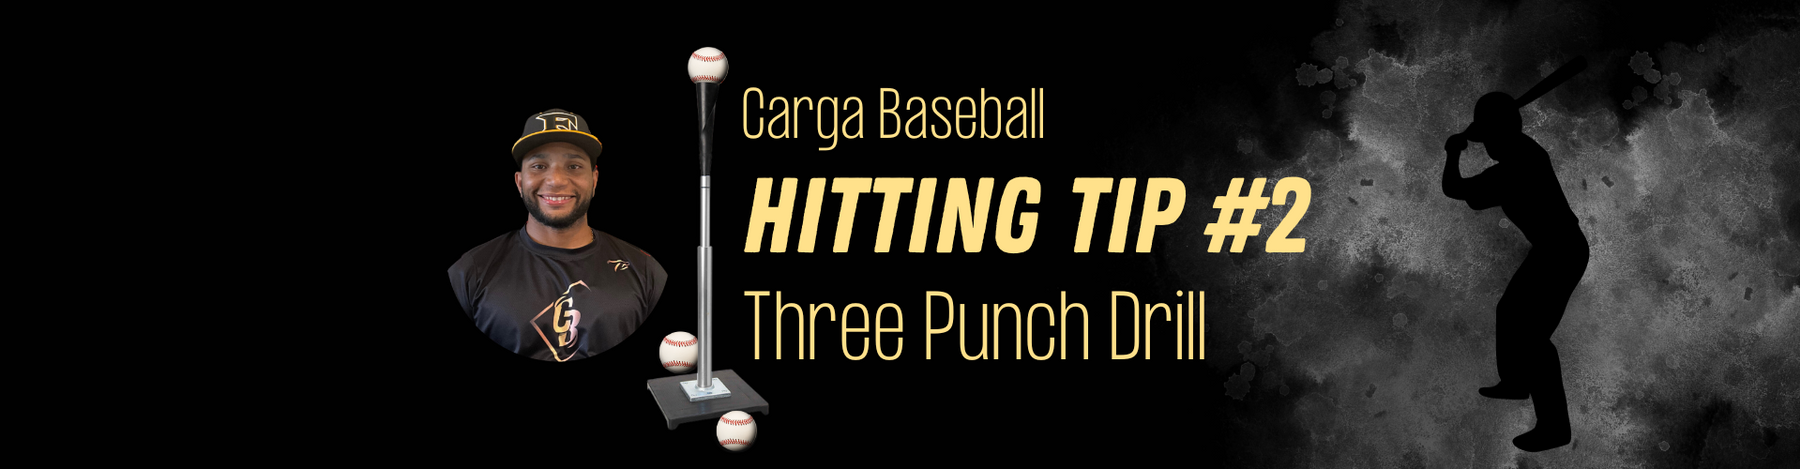 Hitting Tips from Carlos: Batting Drill #2